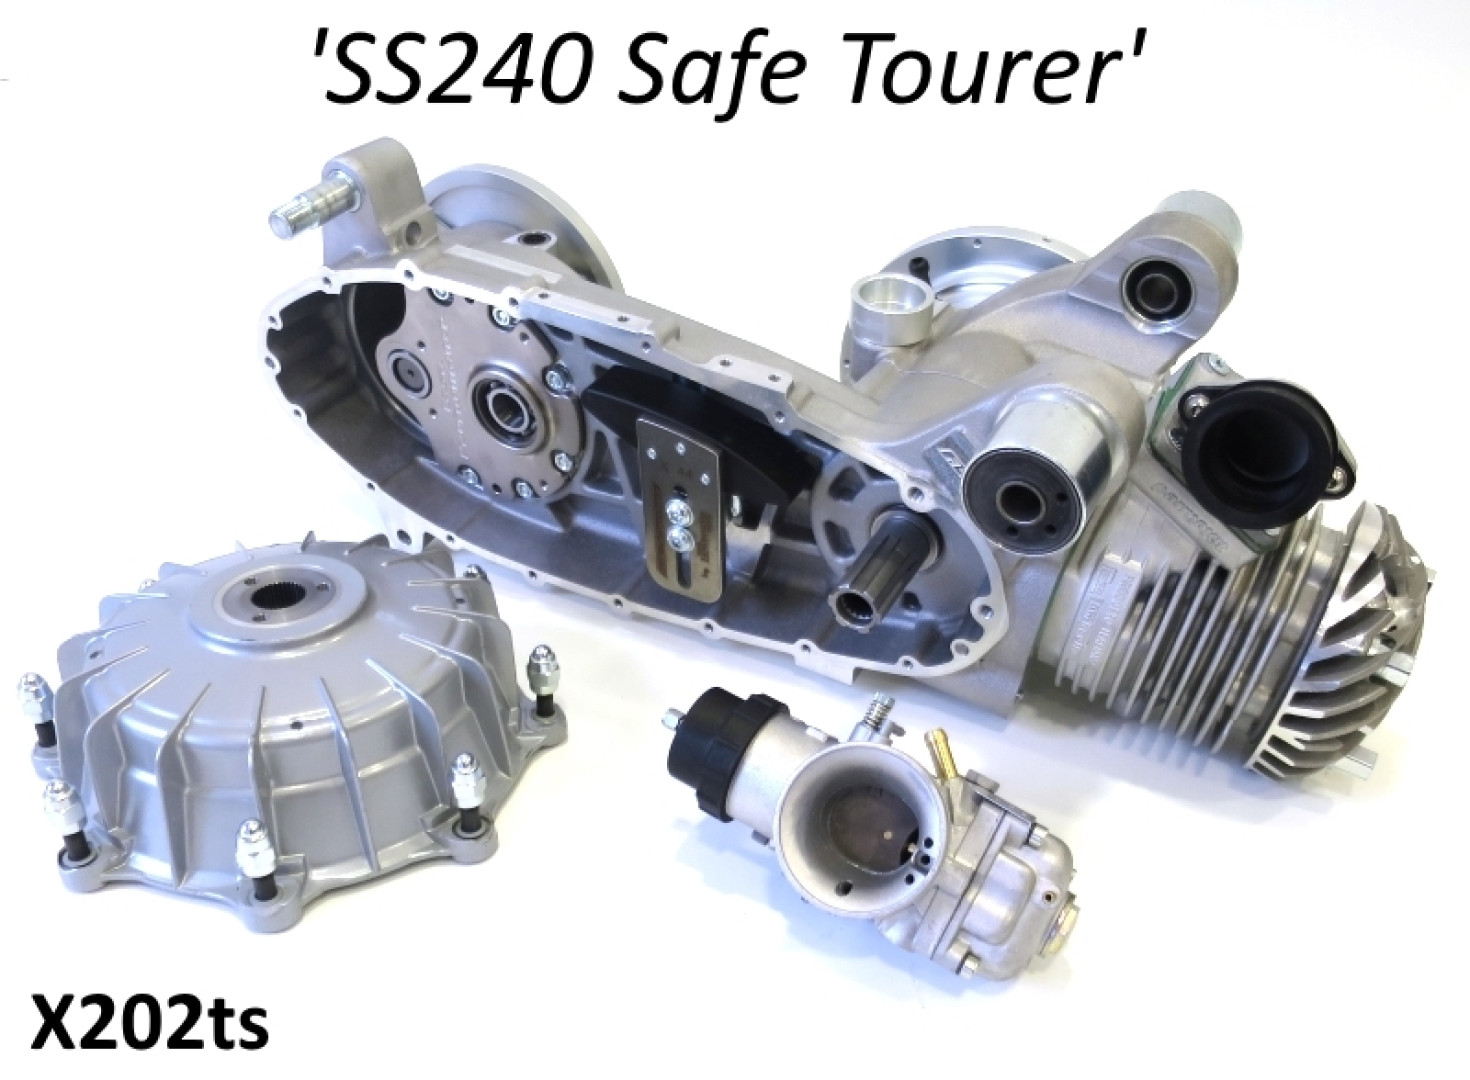 Chiselspeed Tuning LTD - SS240 'Safe Tourer' engine unit (supplied 